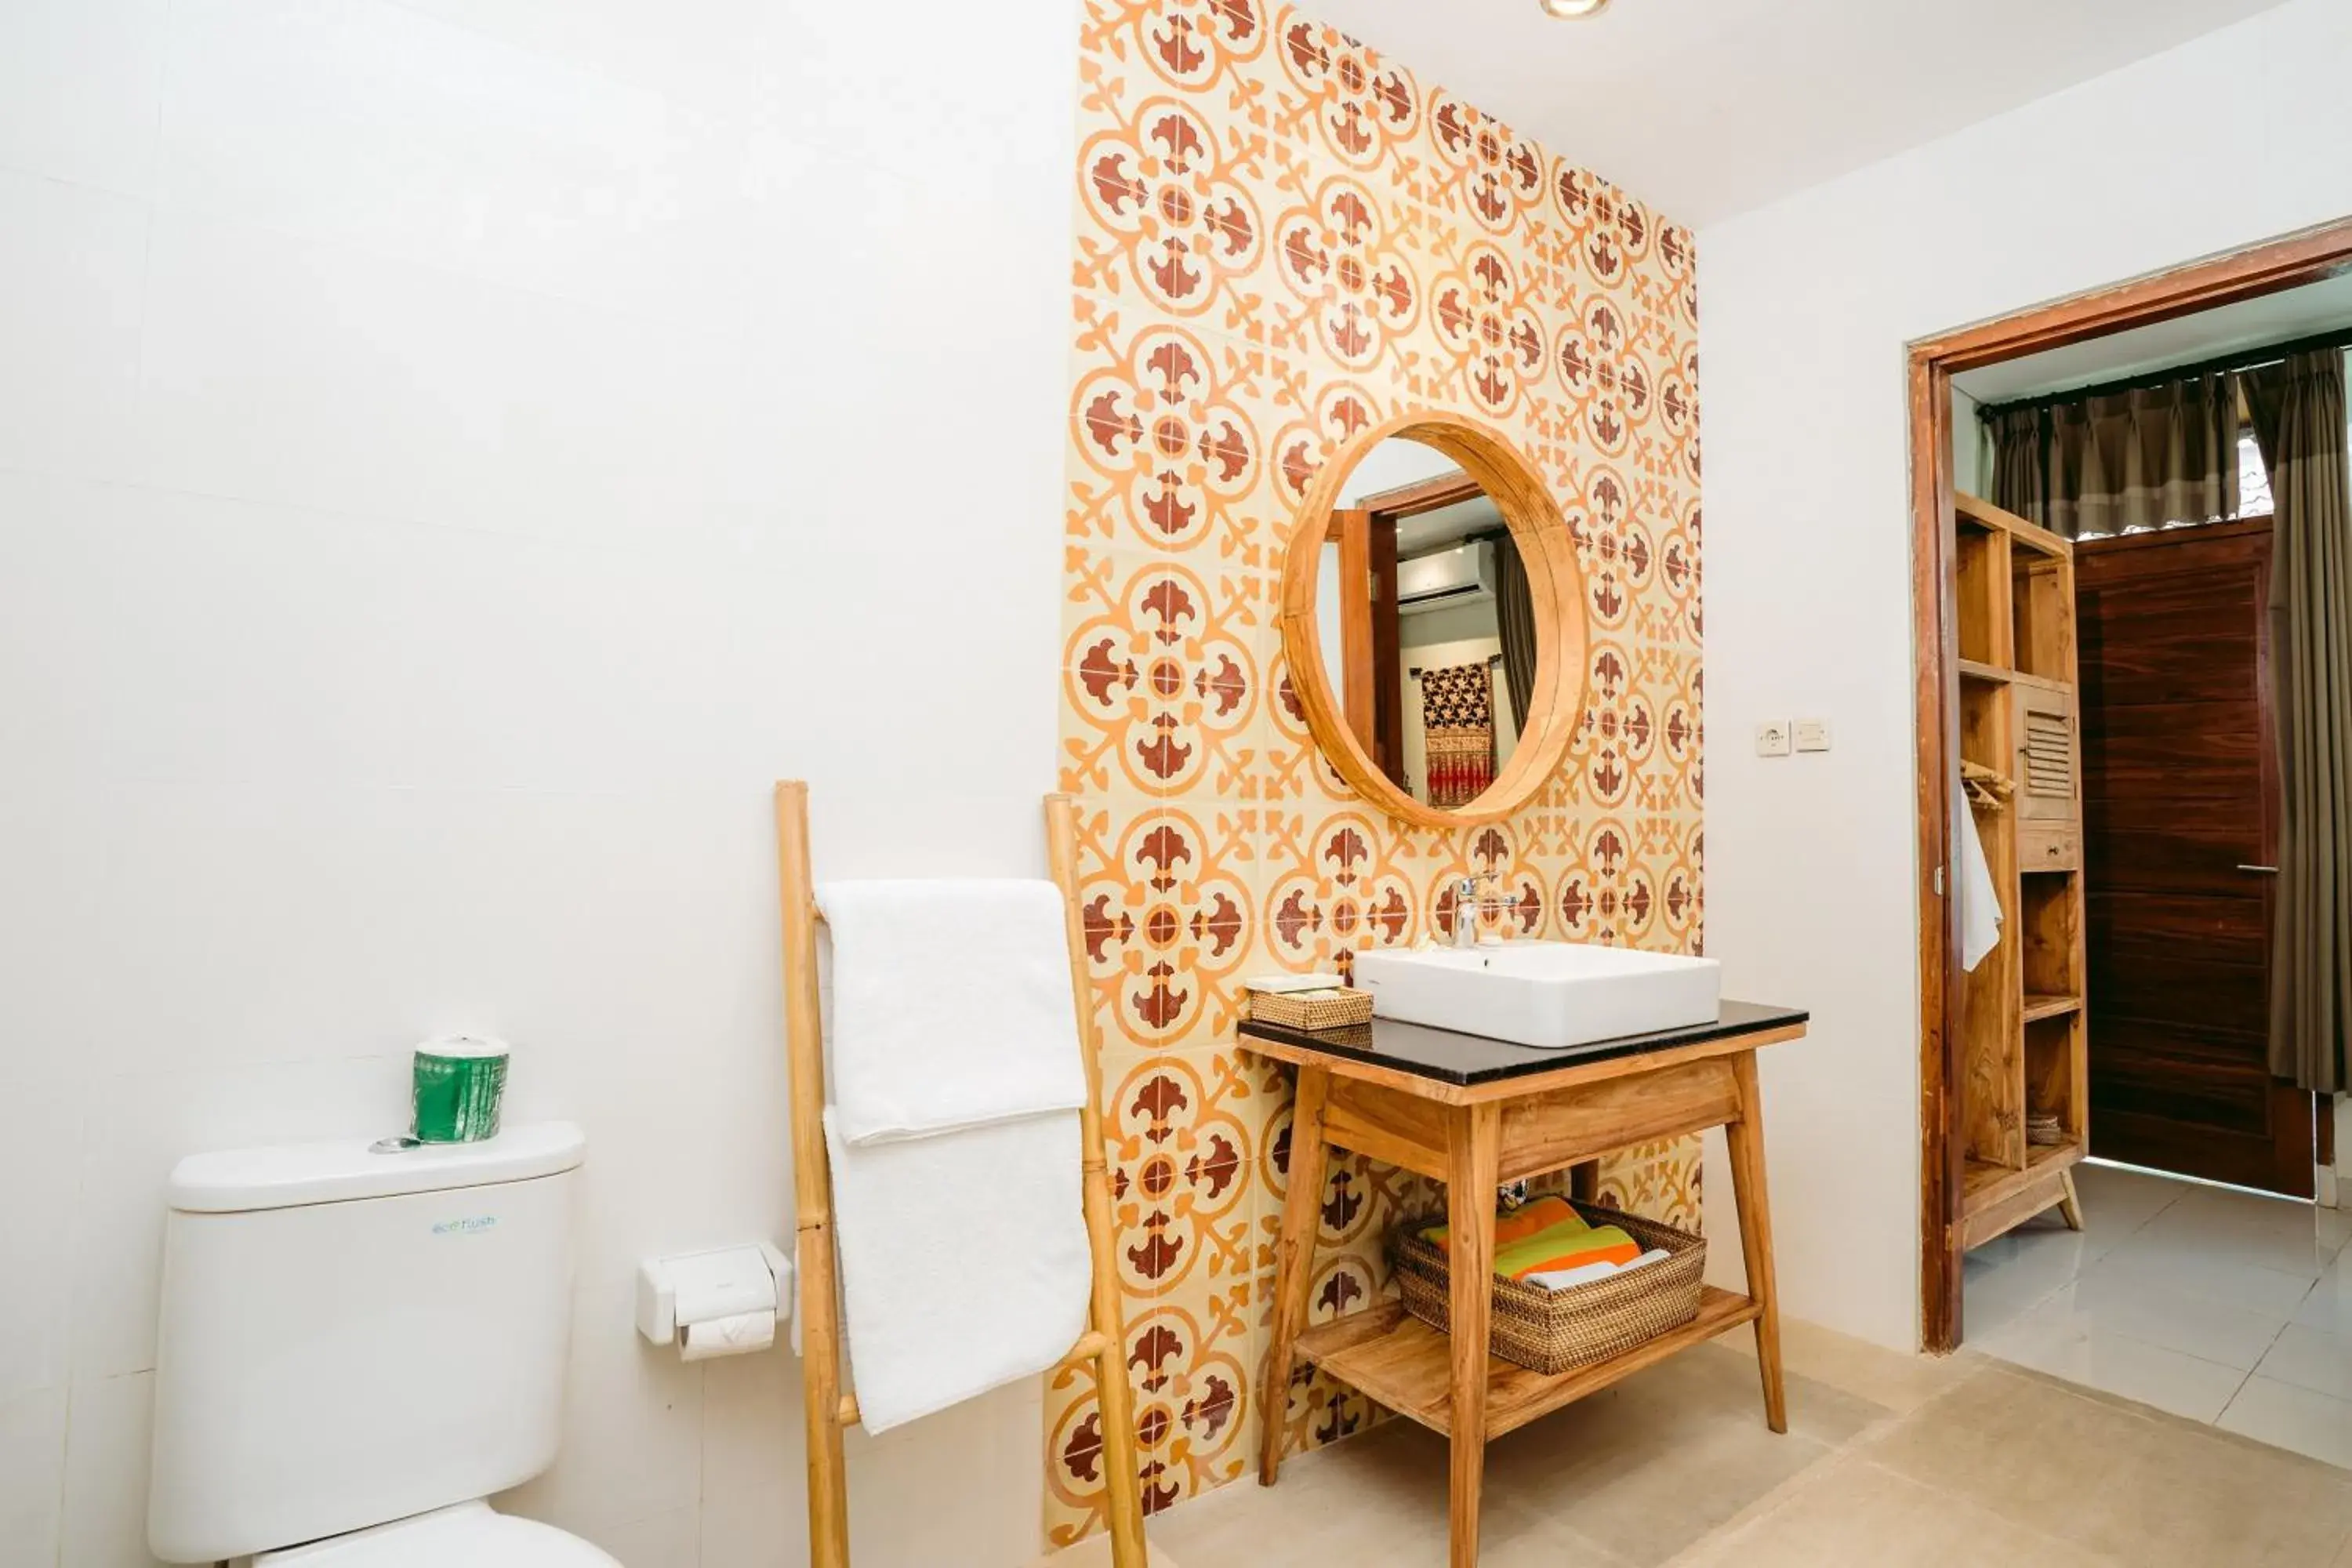 Bathroom, Dining Area in Pertiwi Resort & Spa